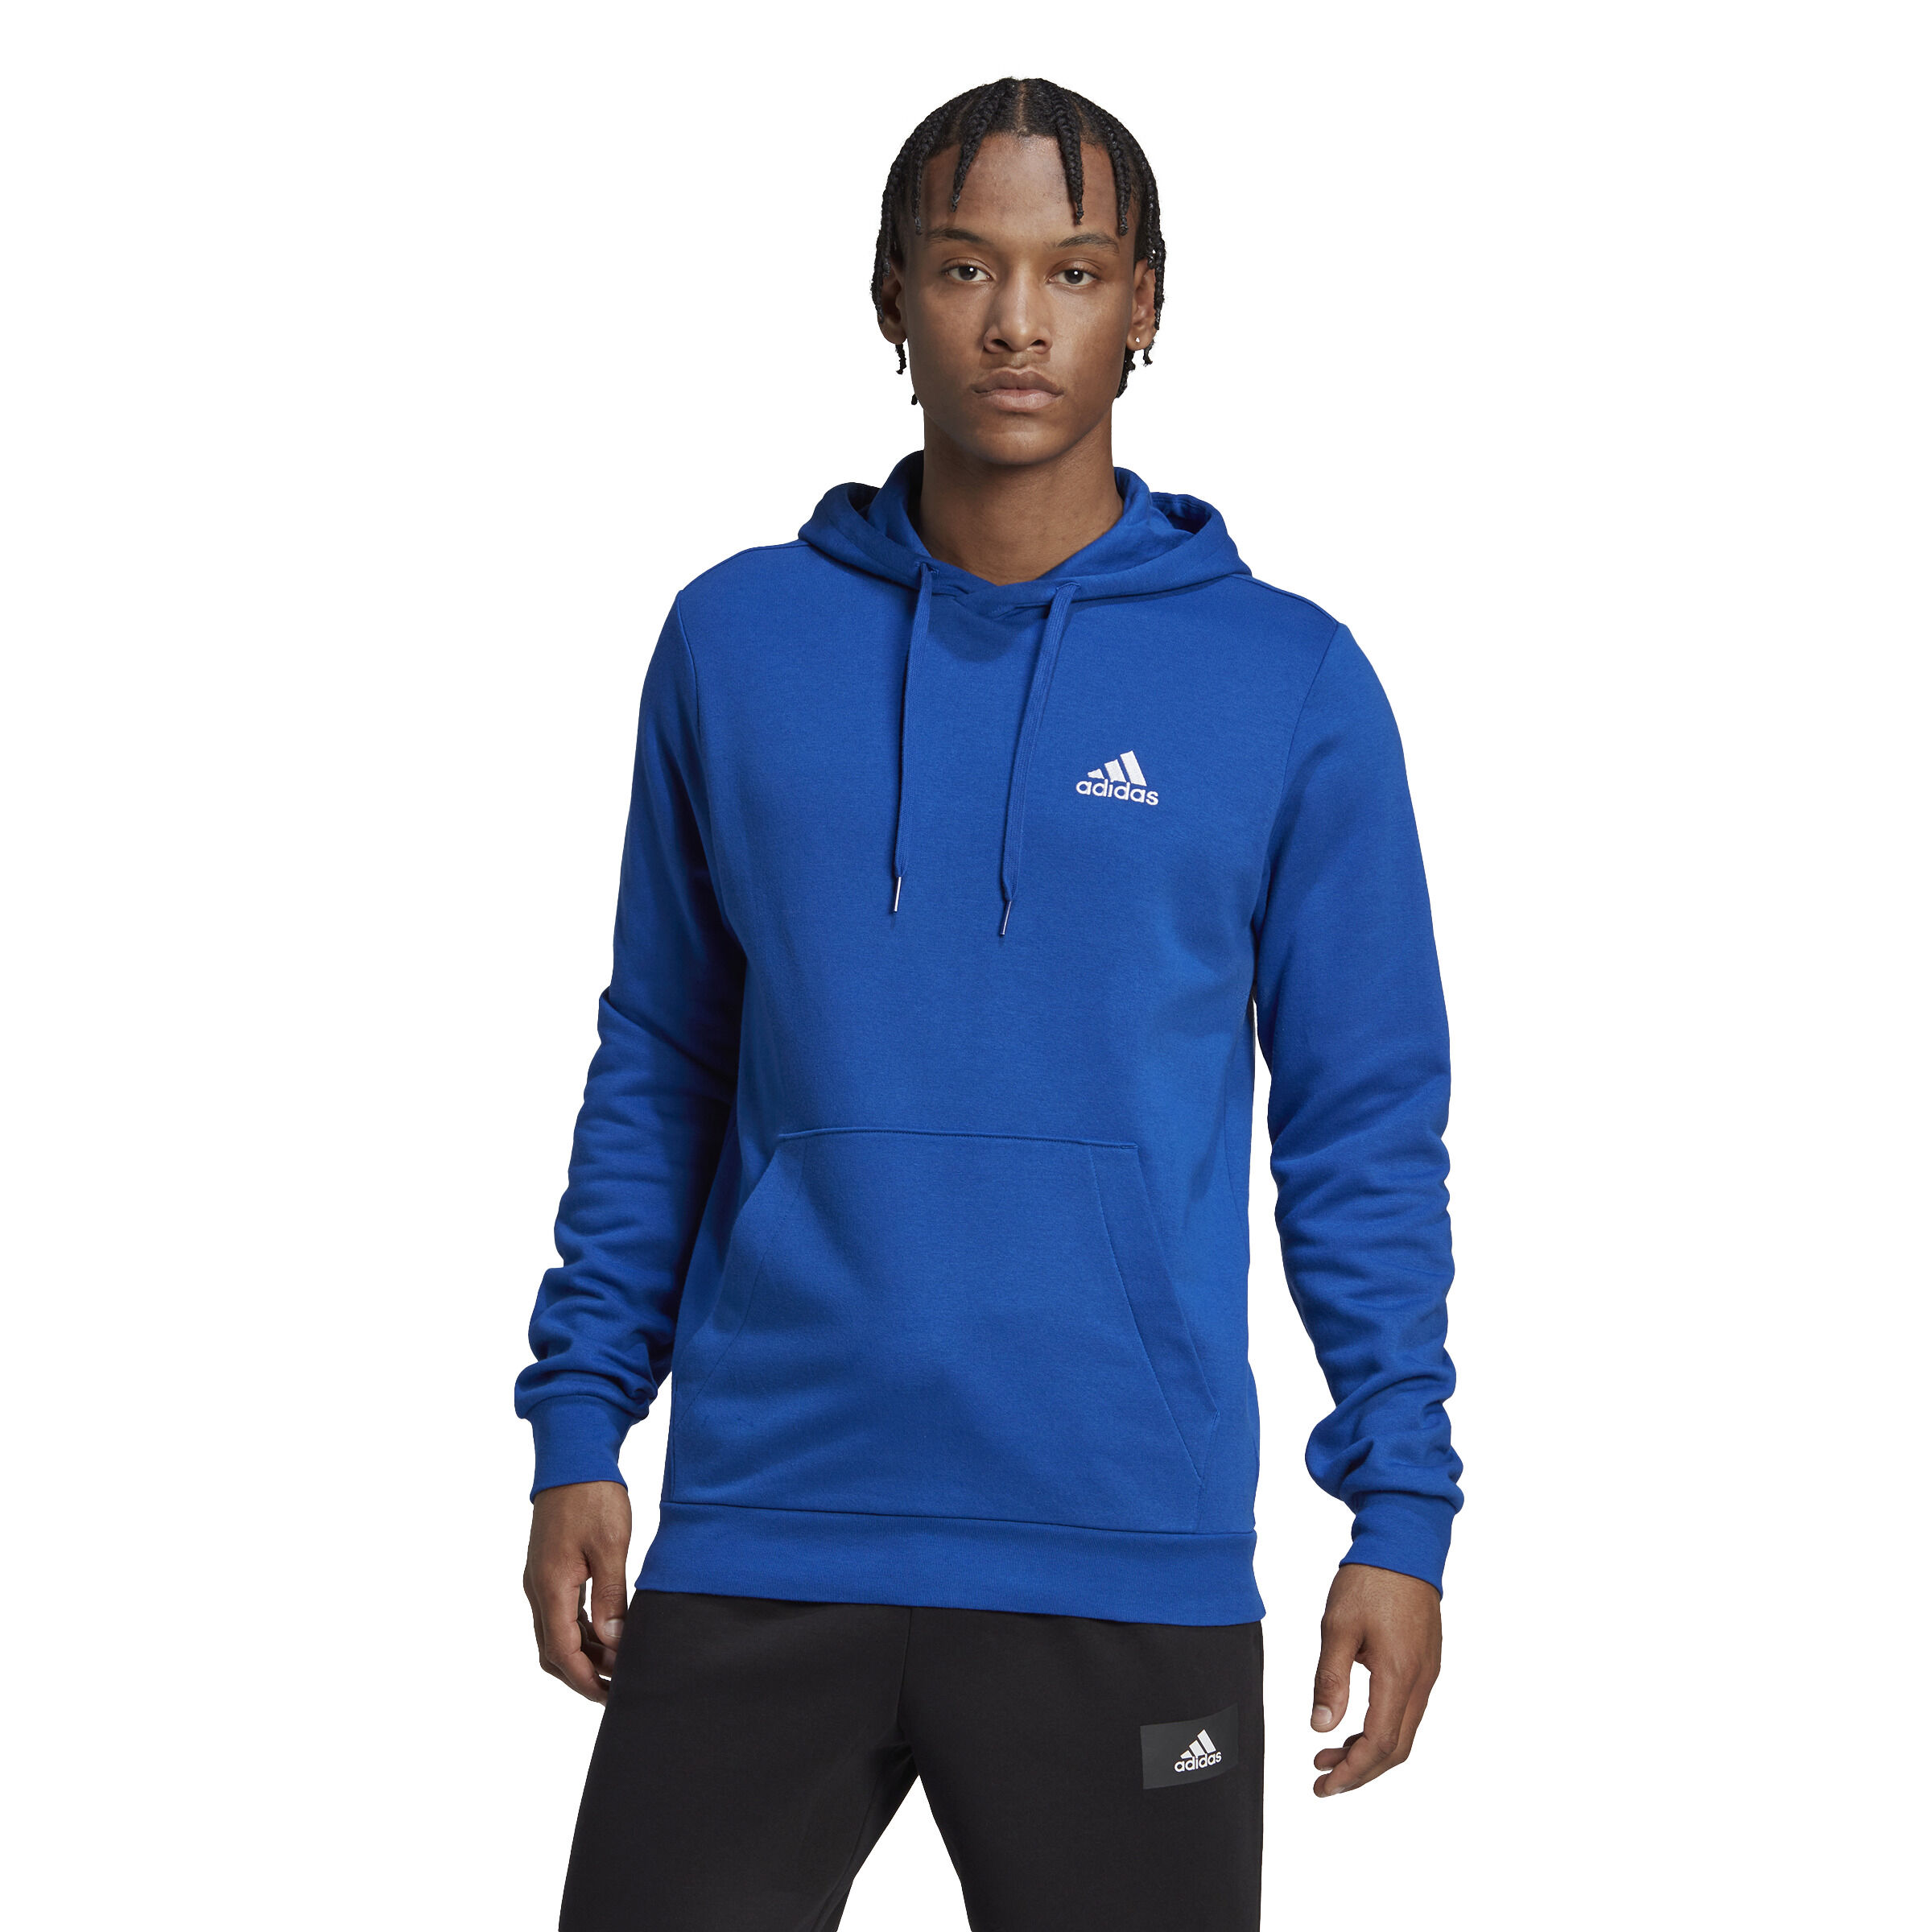 Men's Hoodies & Sweatshirts - Nike, adidas & more - rebel